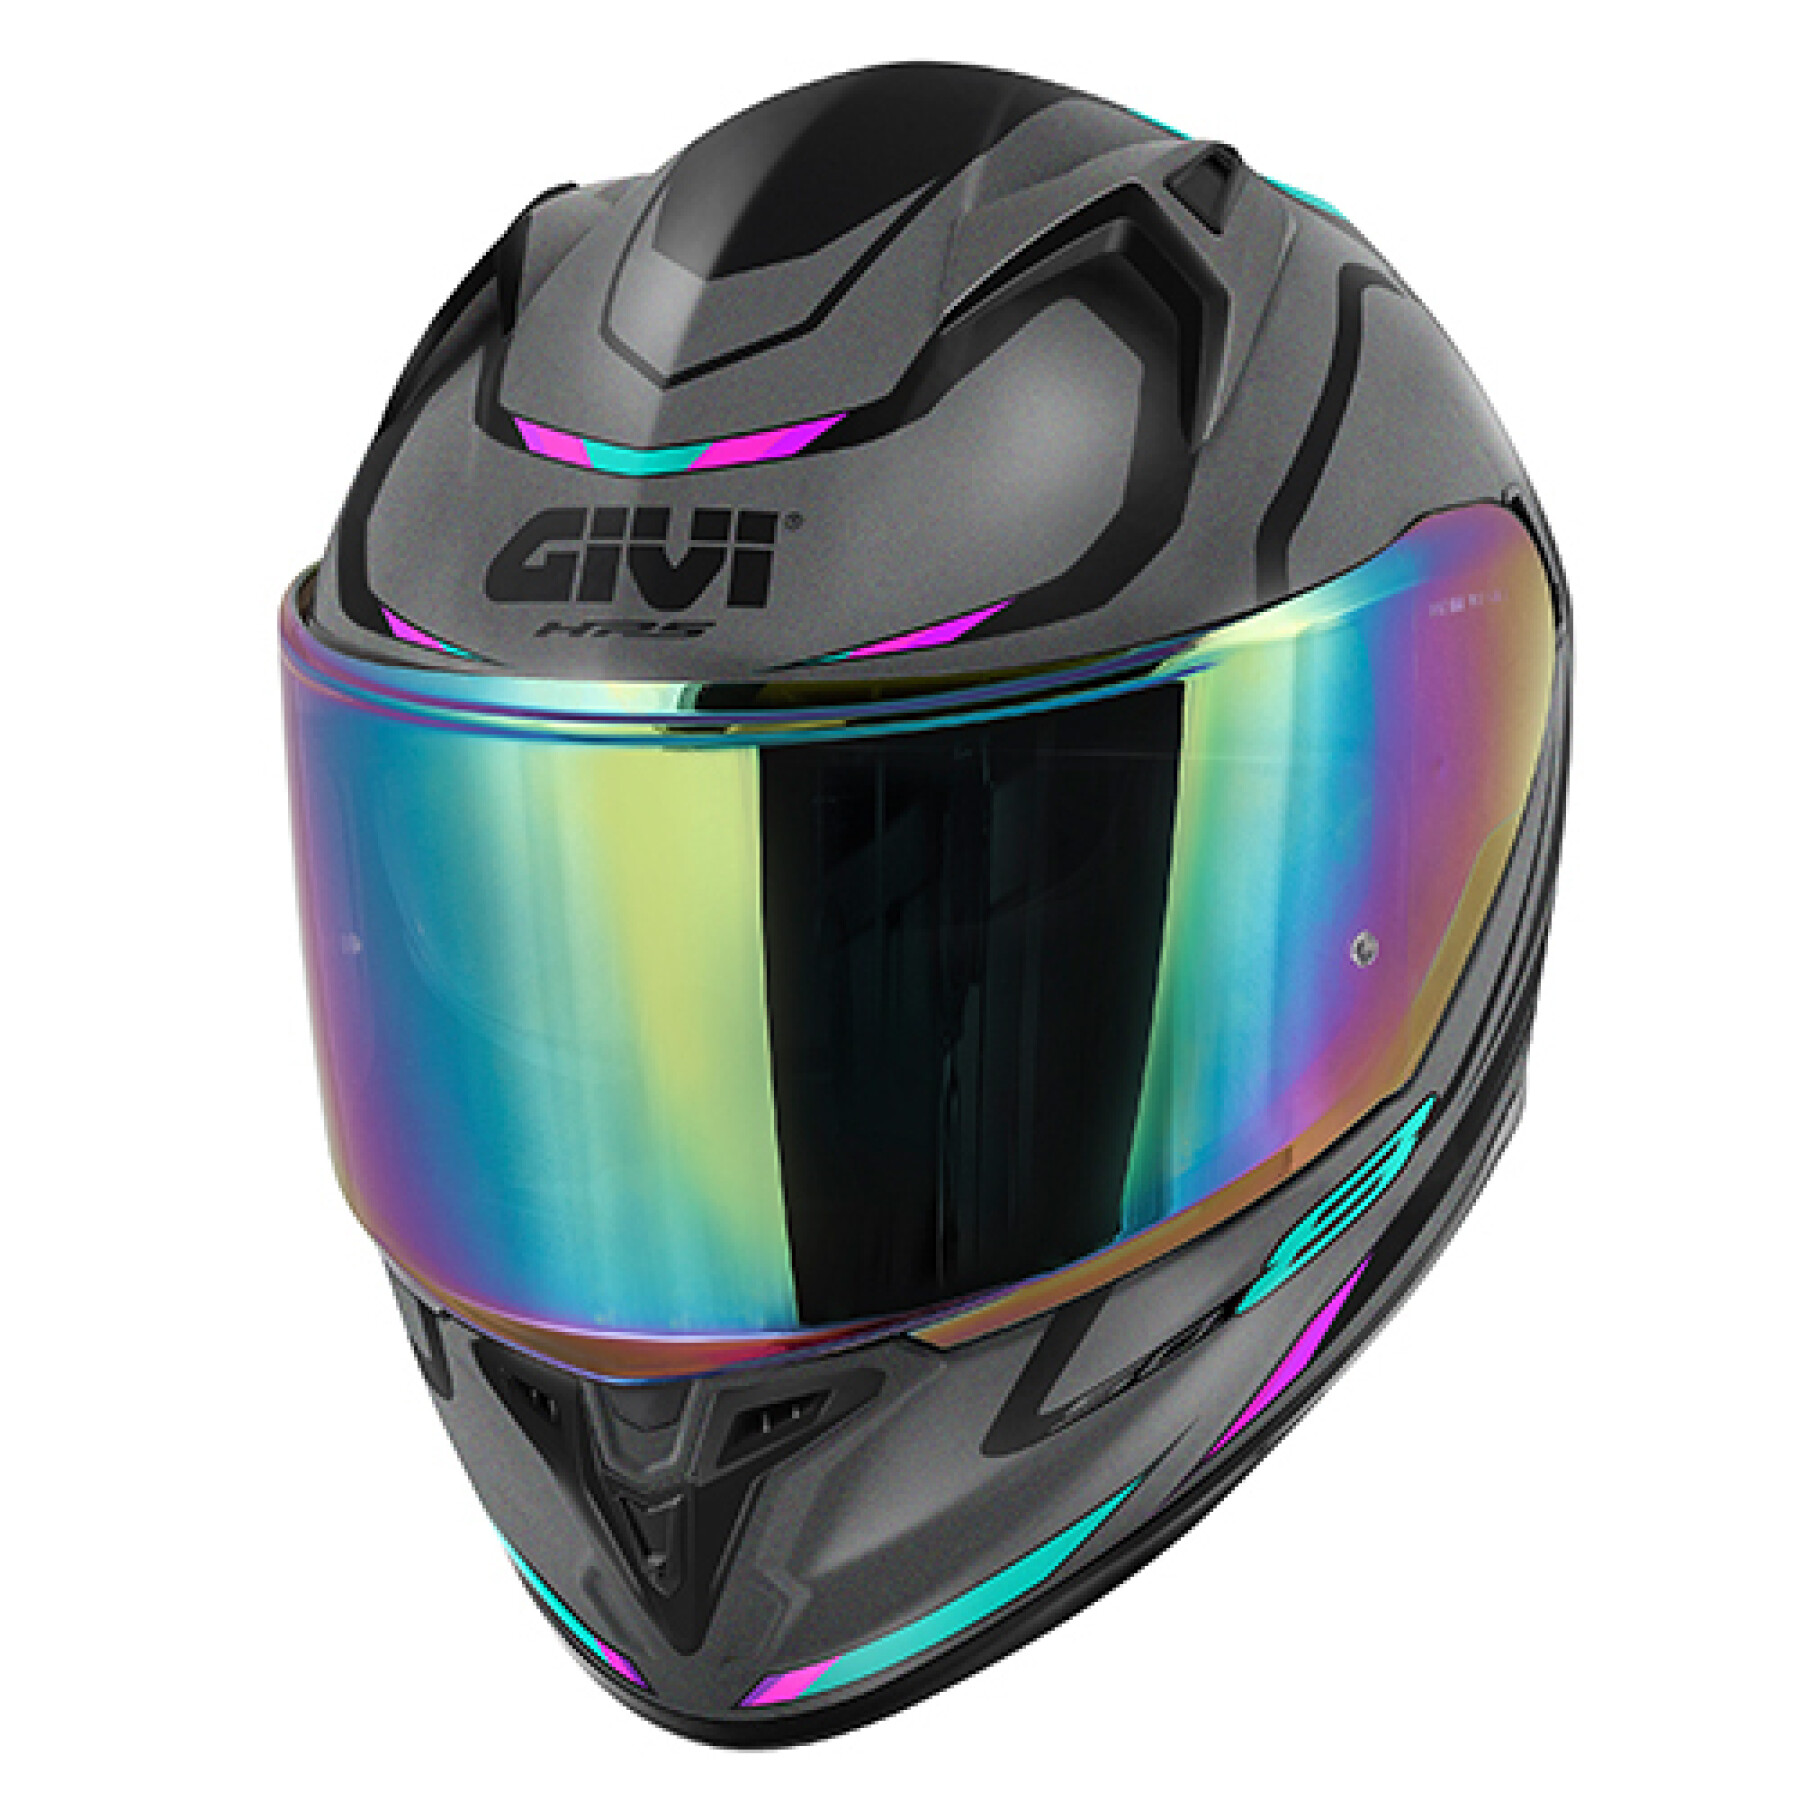 Full face motorcycle helmet Givi Mach1